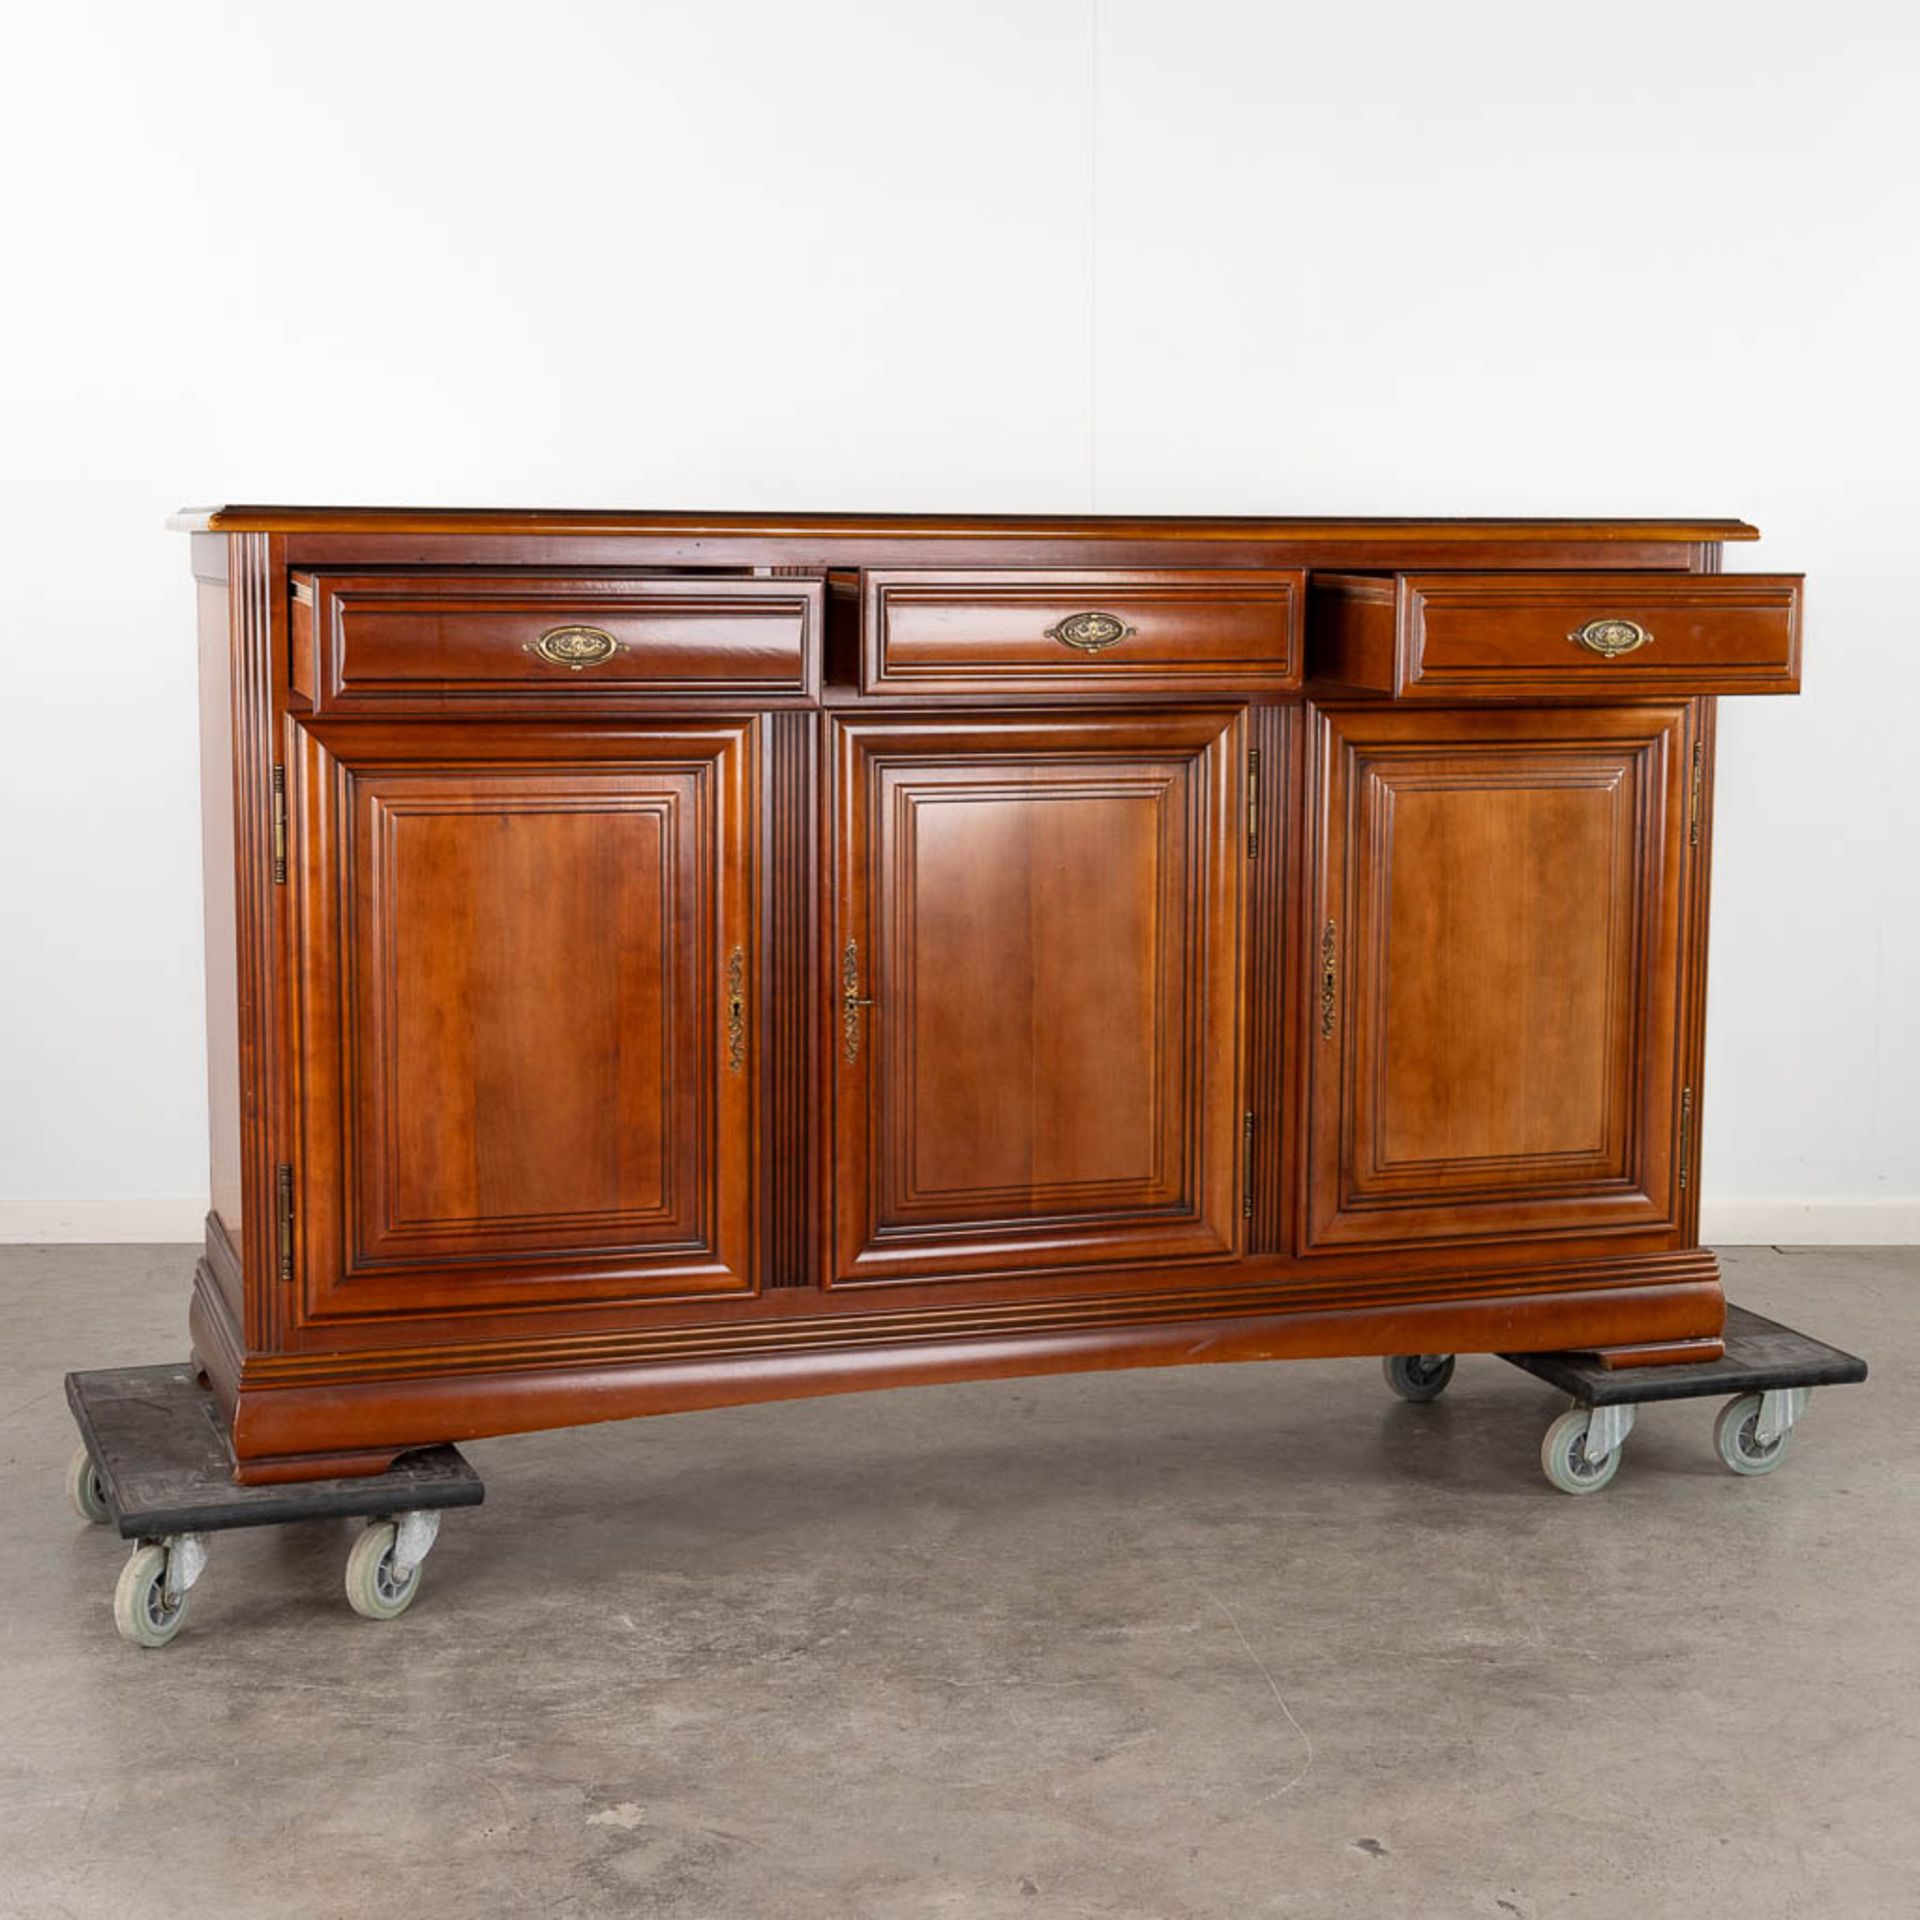 A dresser with 3 door s and 3 drawers, 20th C. (D:50 x W:171 x H:97 cm) - Image 4 of 18